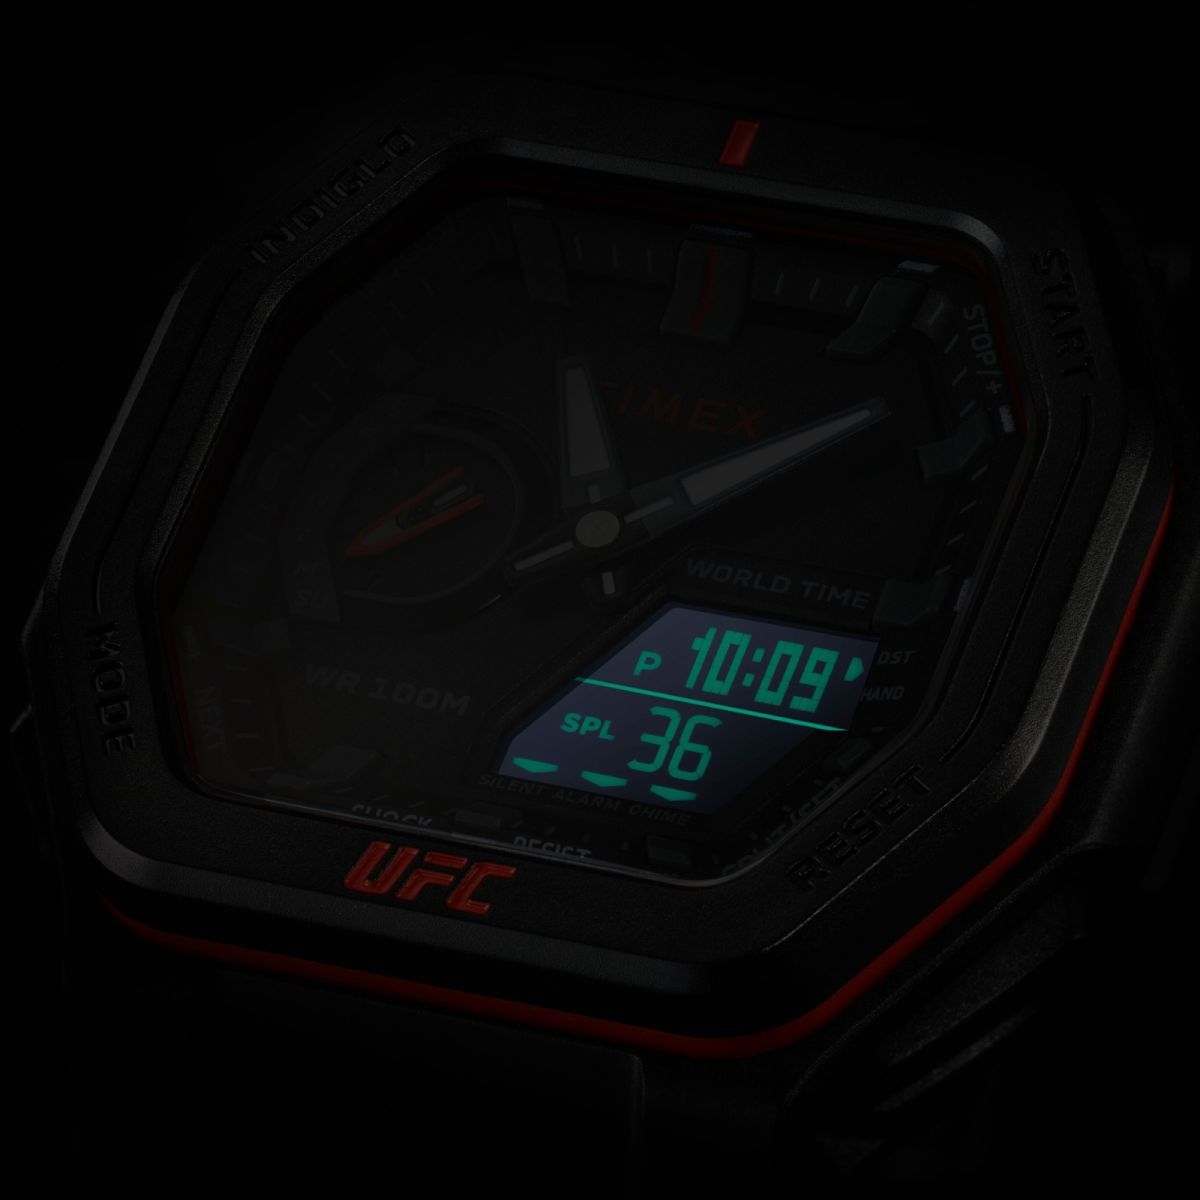 Hodinky Timex UFC Colossus